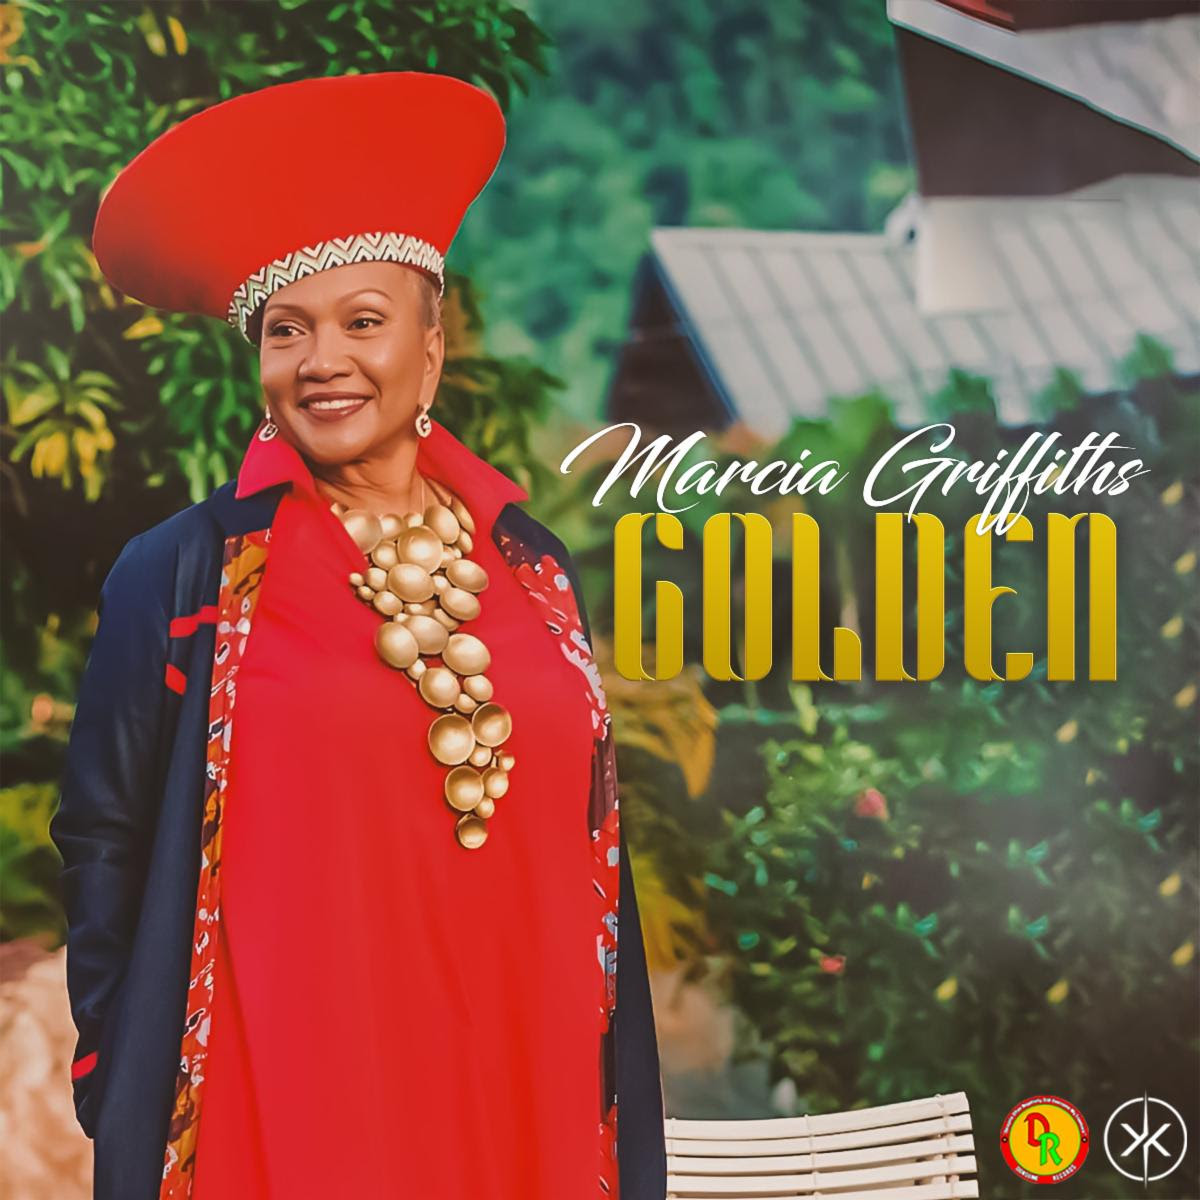 marcia-griffiths-drops-new-album